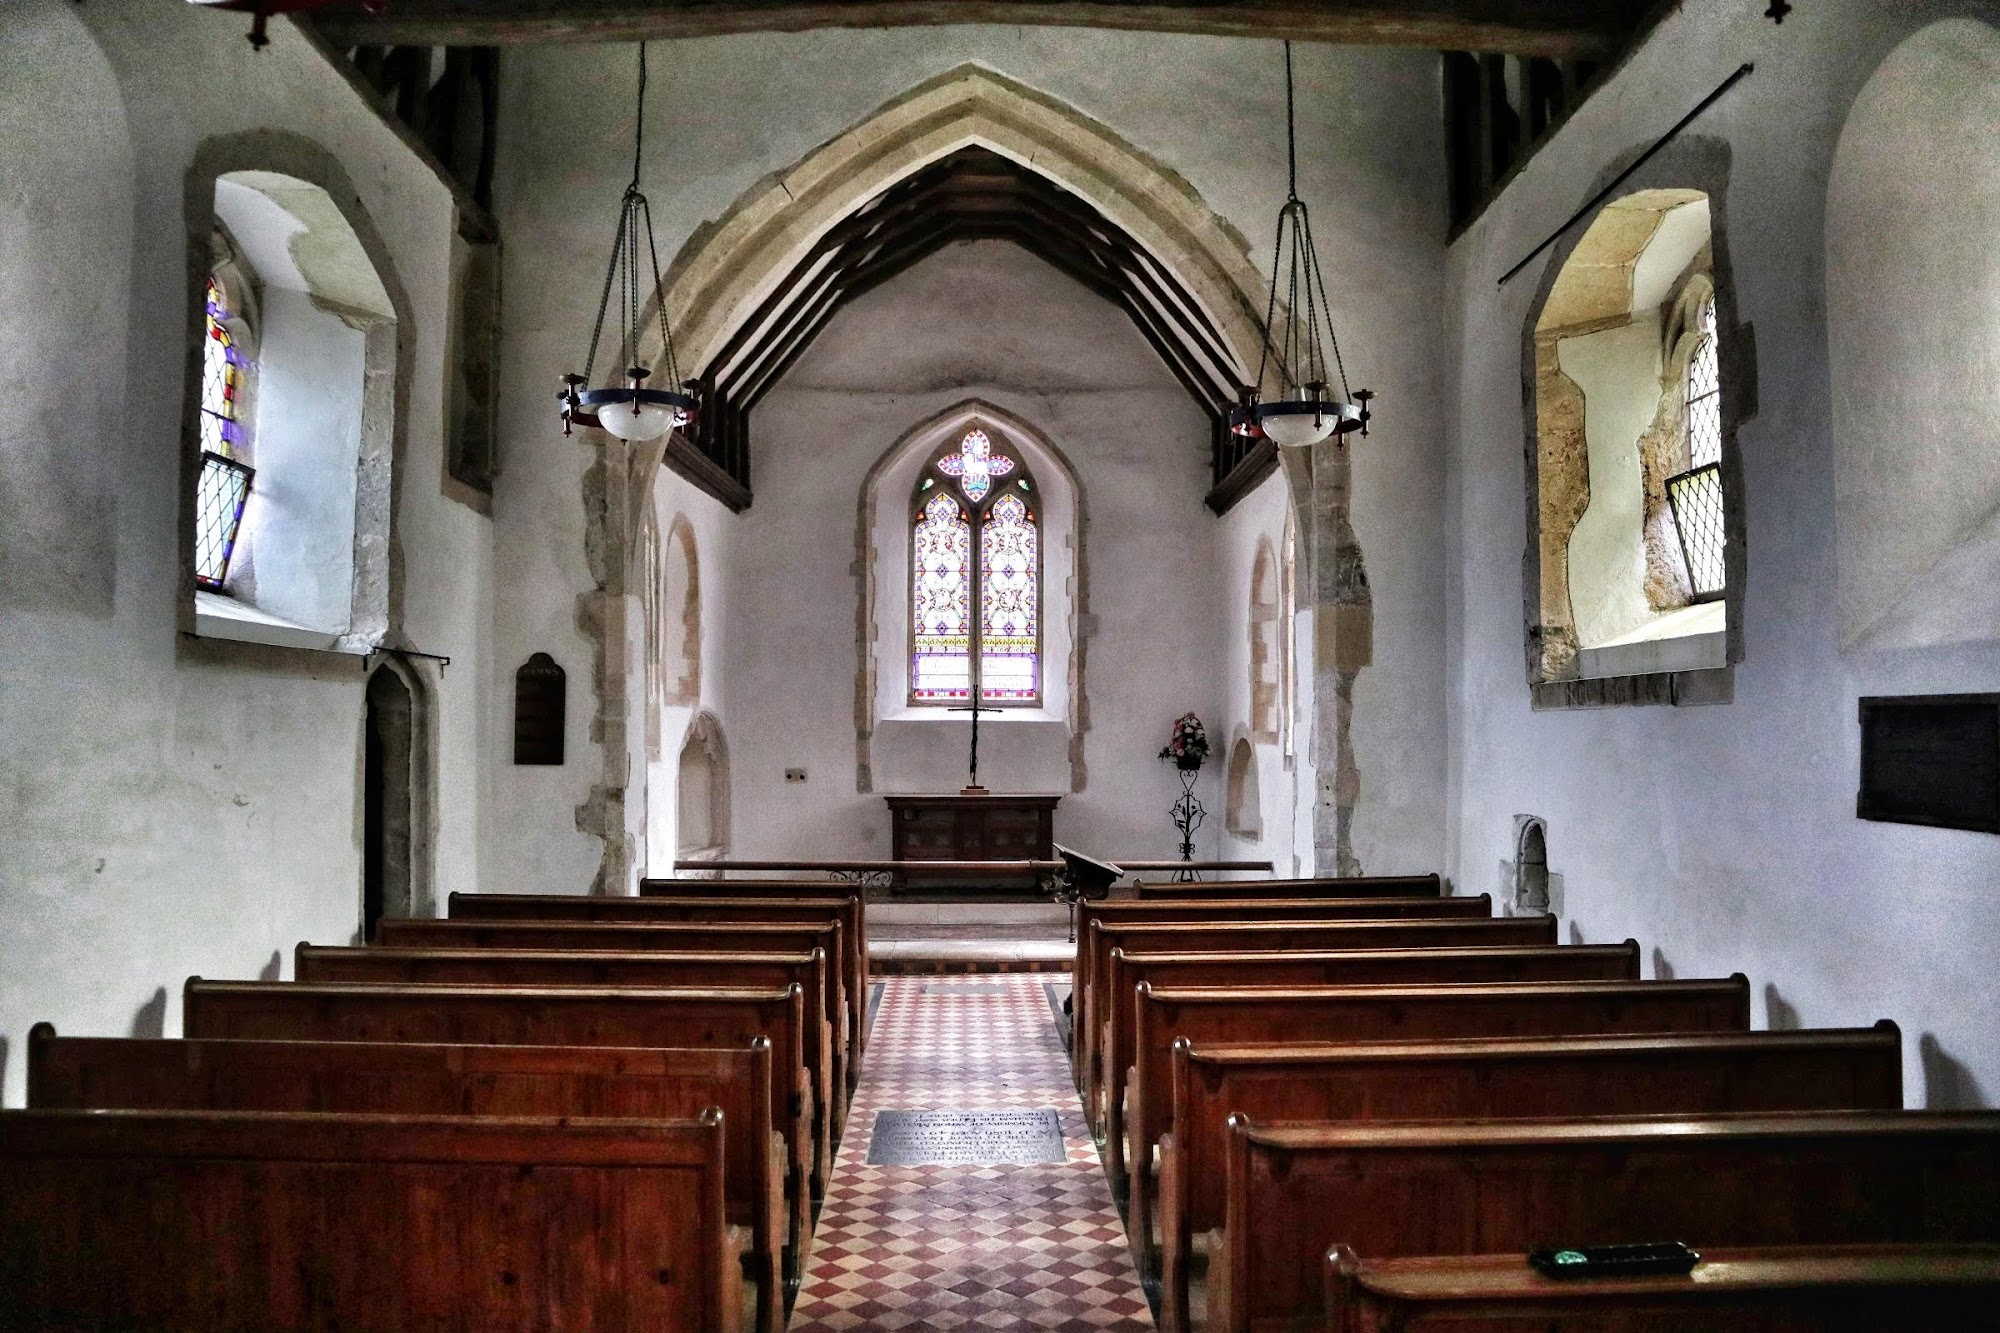 St Bartholomew's Church, Goodnestone